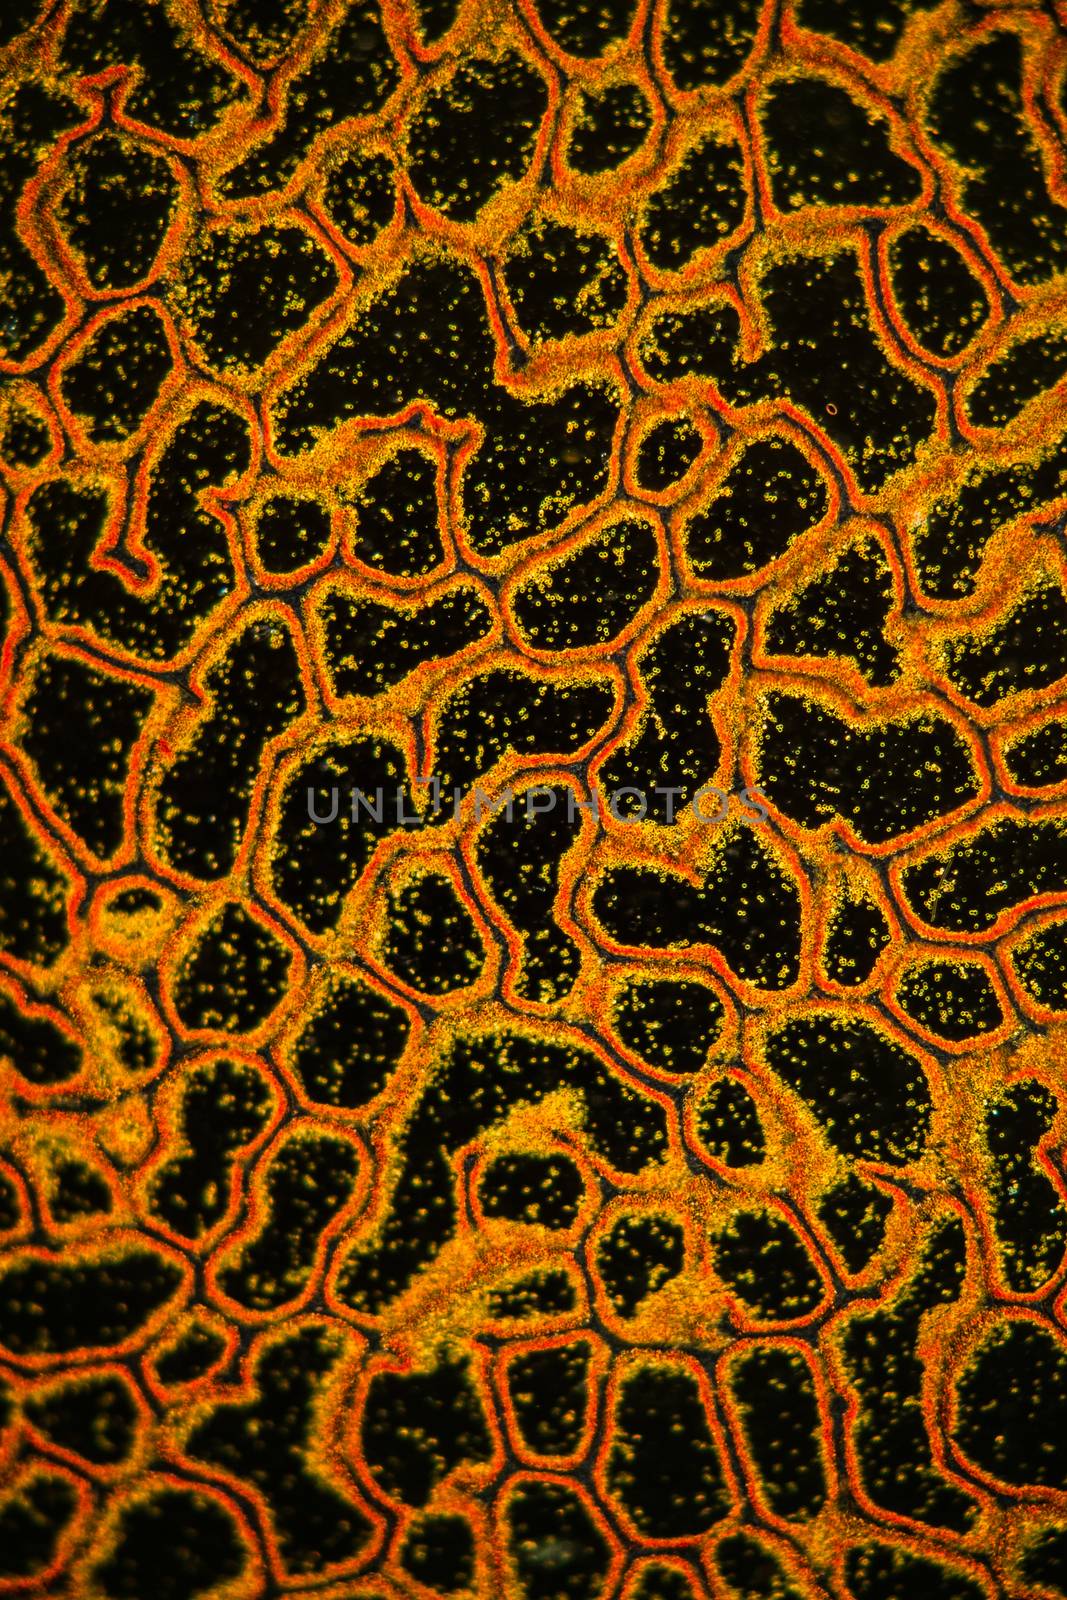 Bovist mushroom mushroom cap under the microscope 100x